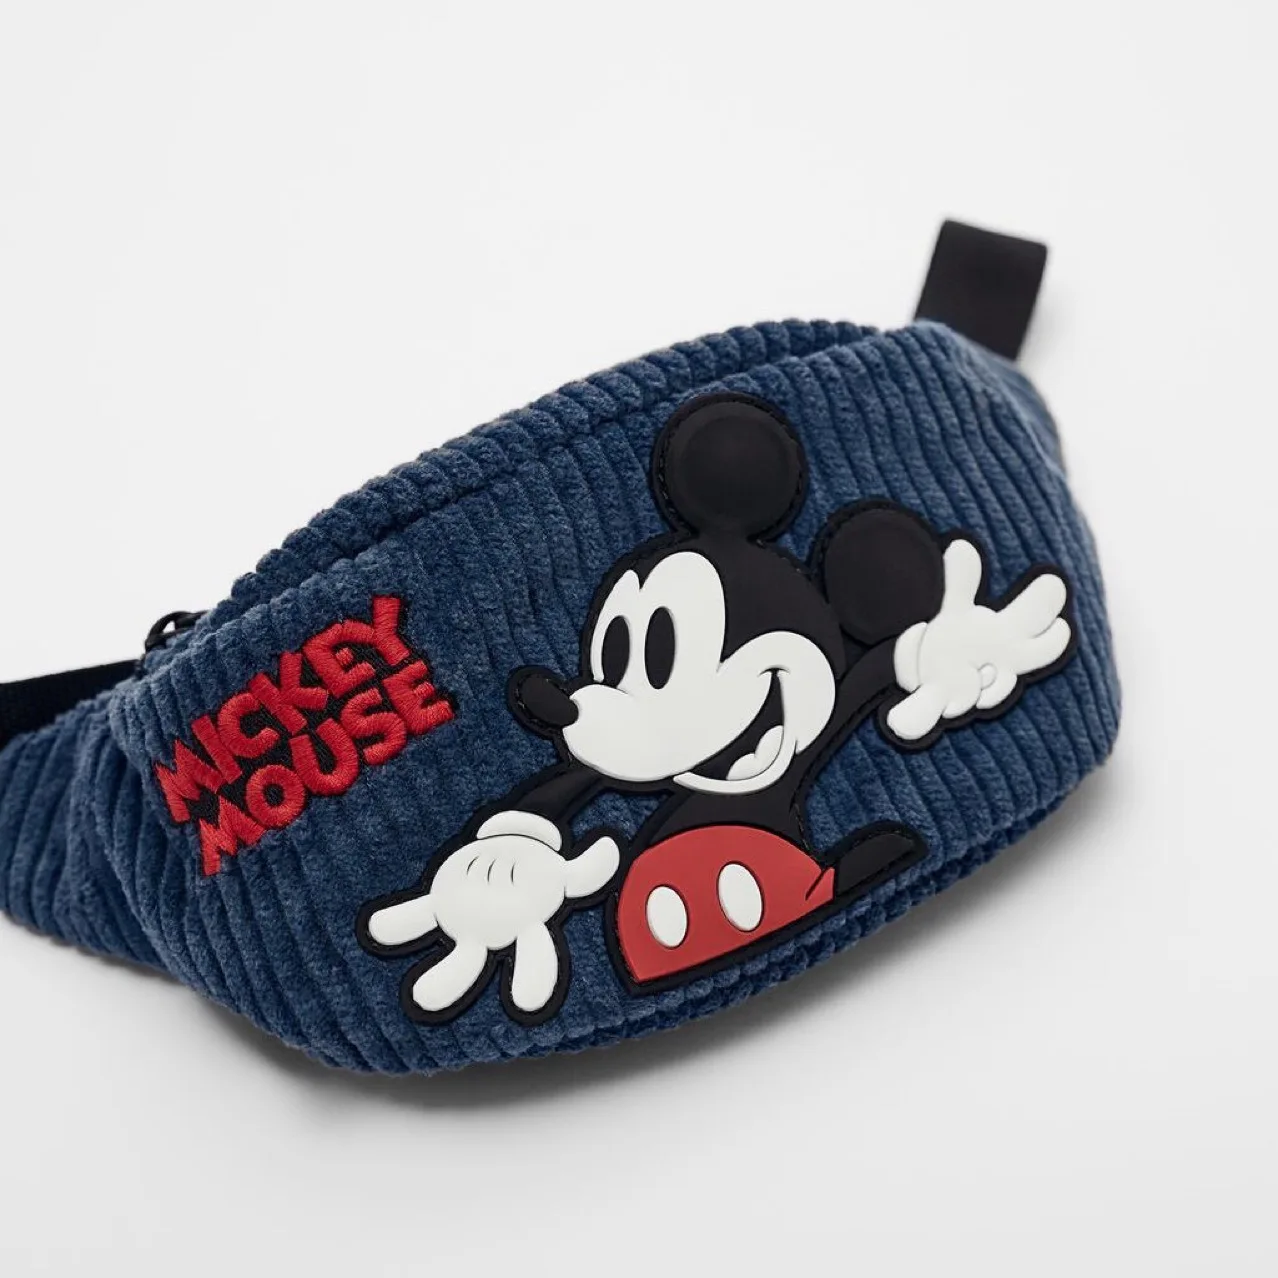 New Disney Mickey Mouse Cartoon Printed Fanny Pack Mickey Mouse Adorns The Corduroy Fanny Pack Plush Backpack Fashion Bag Purses